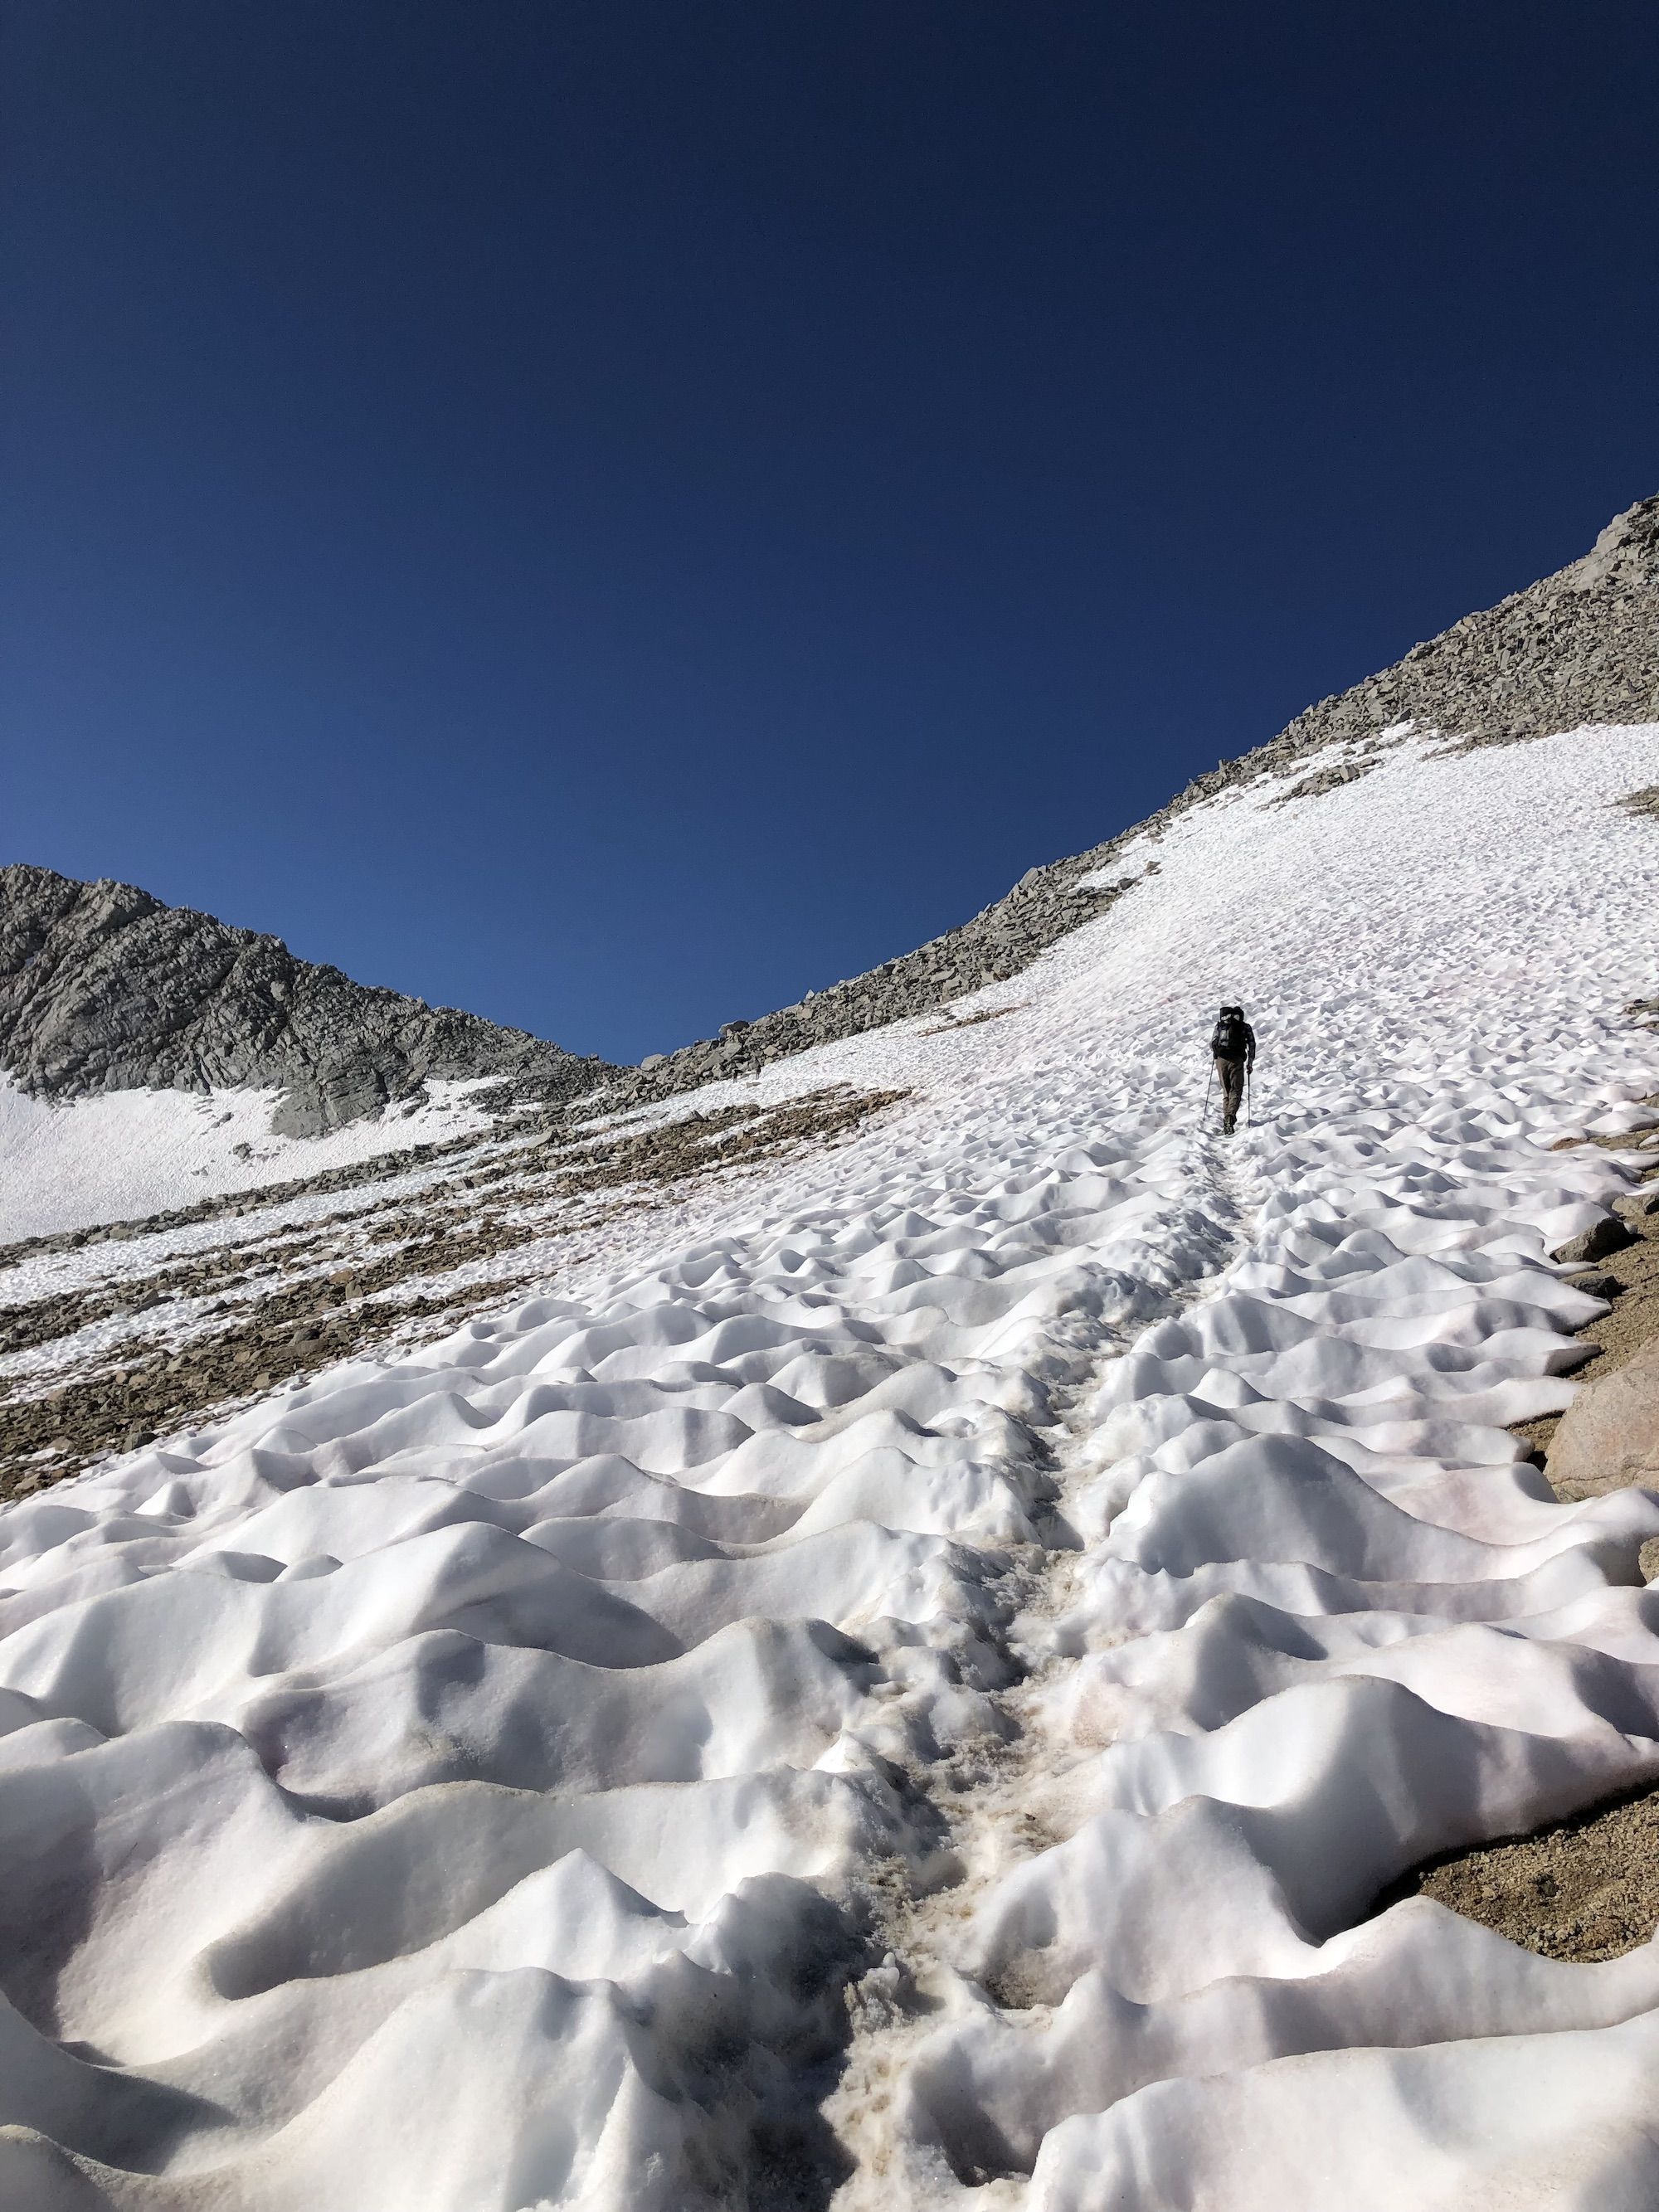 A hiker crossing a snow field